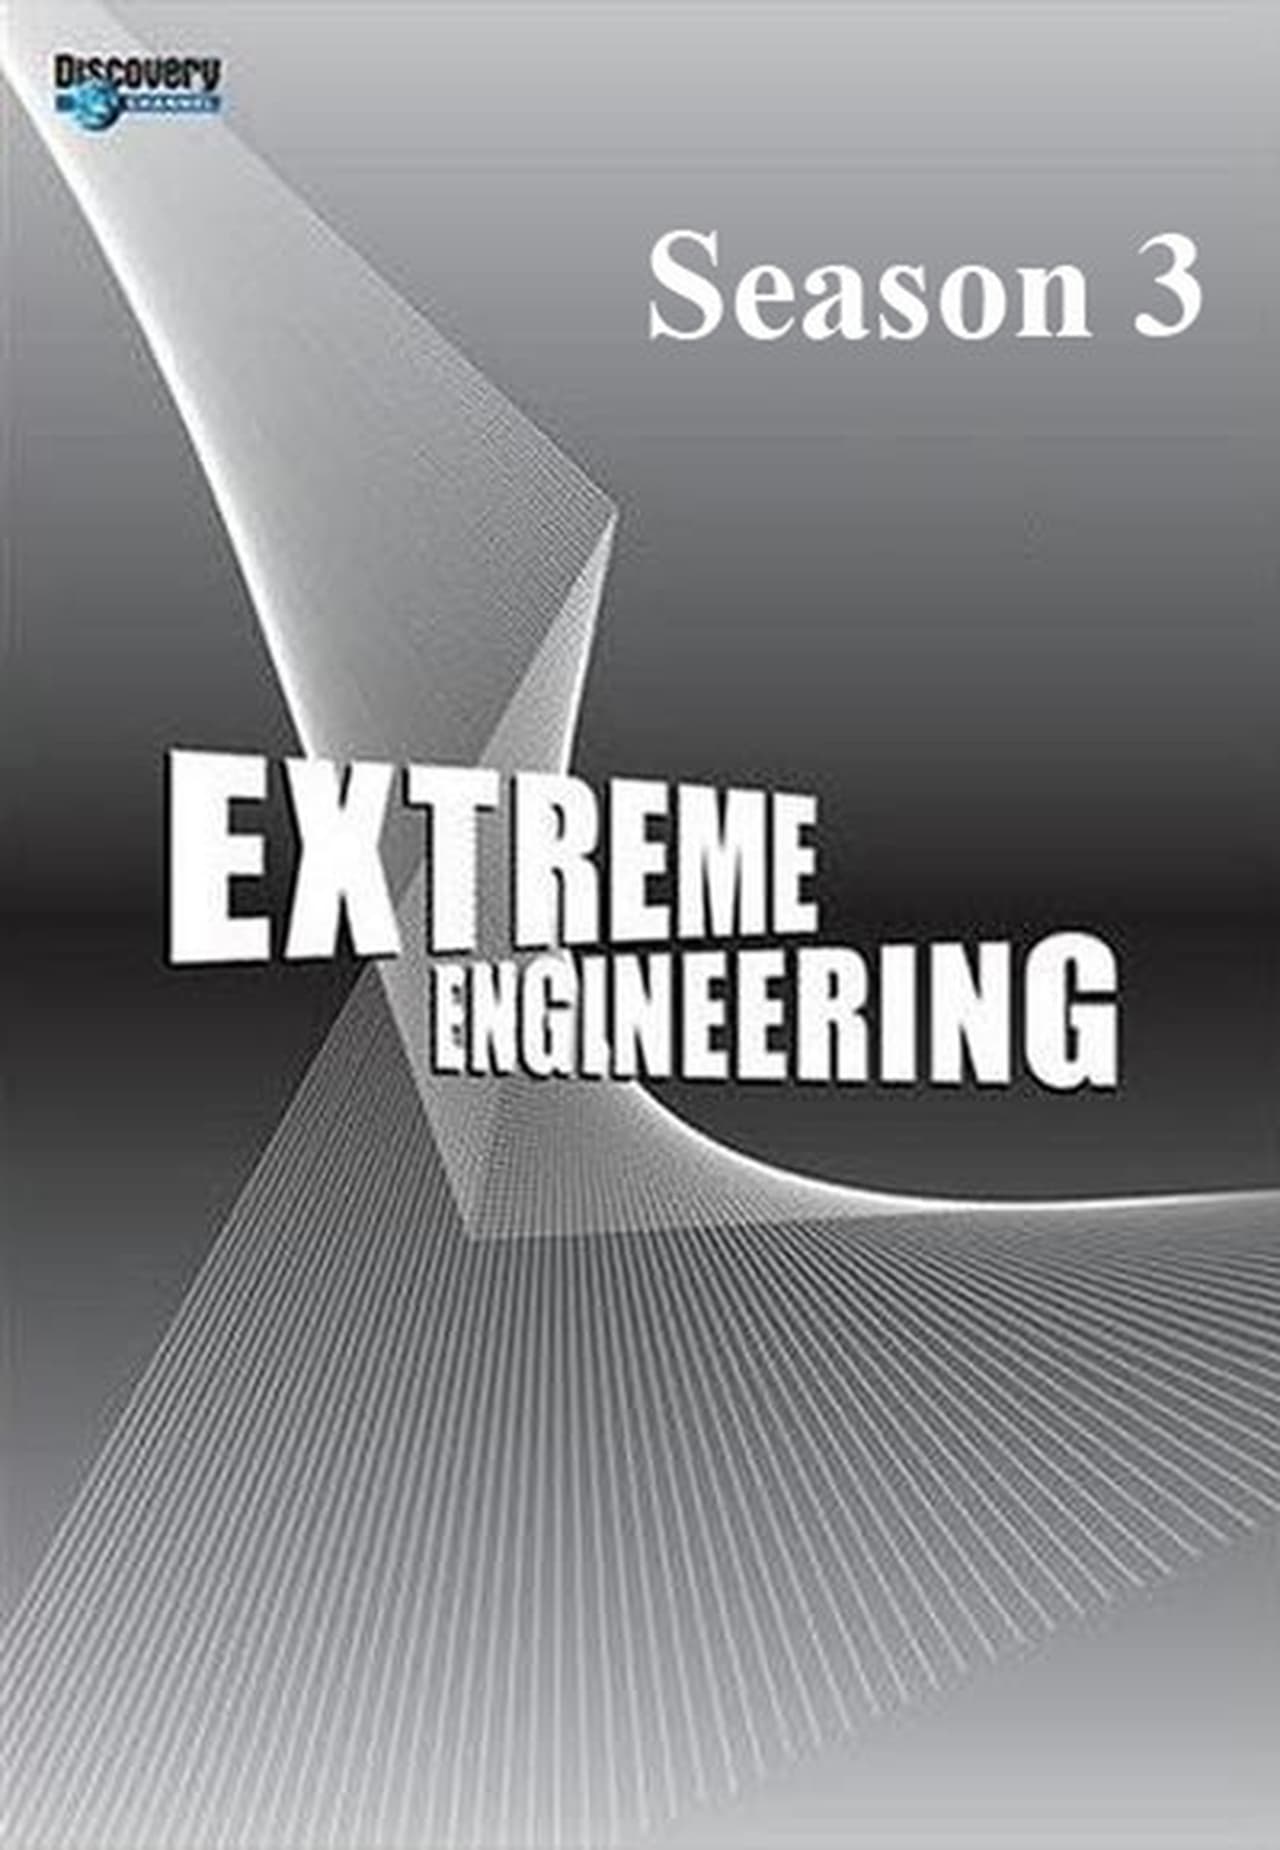 Extreme Engineering Season 3